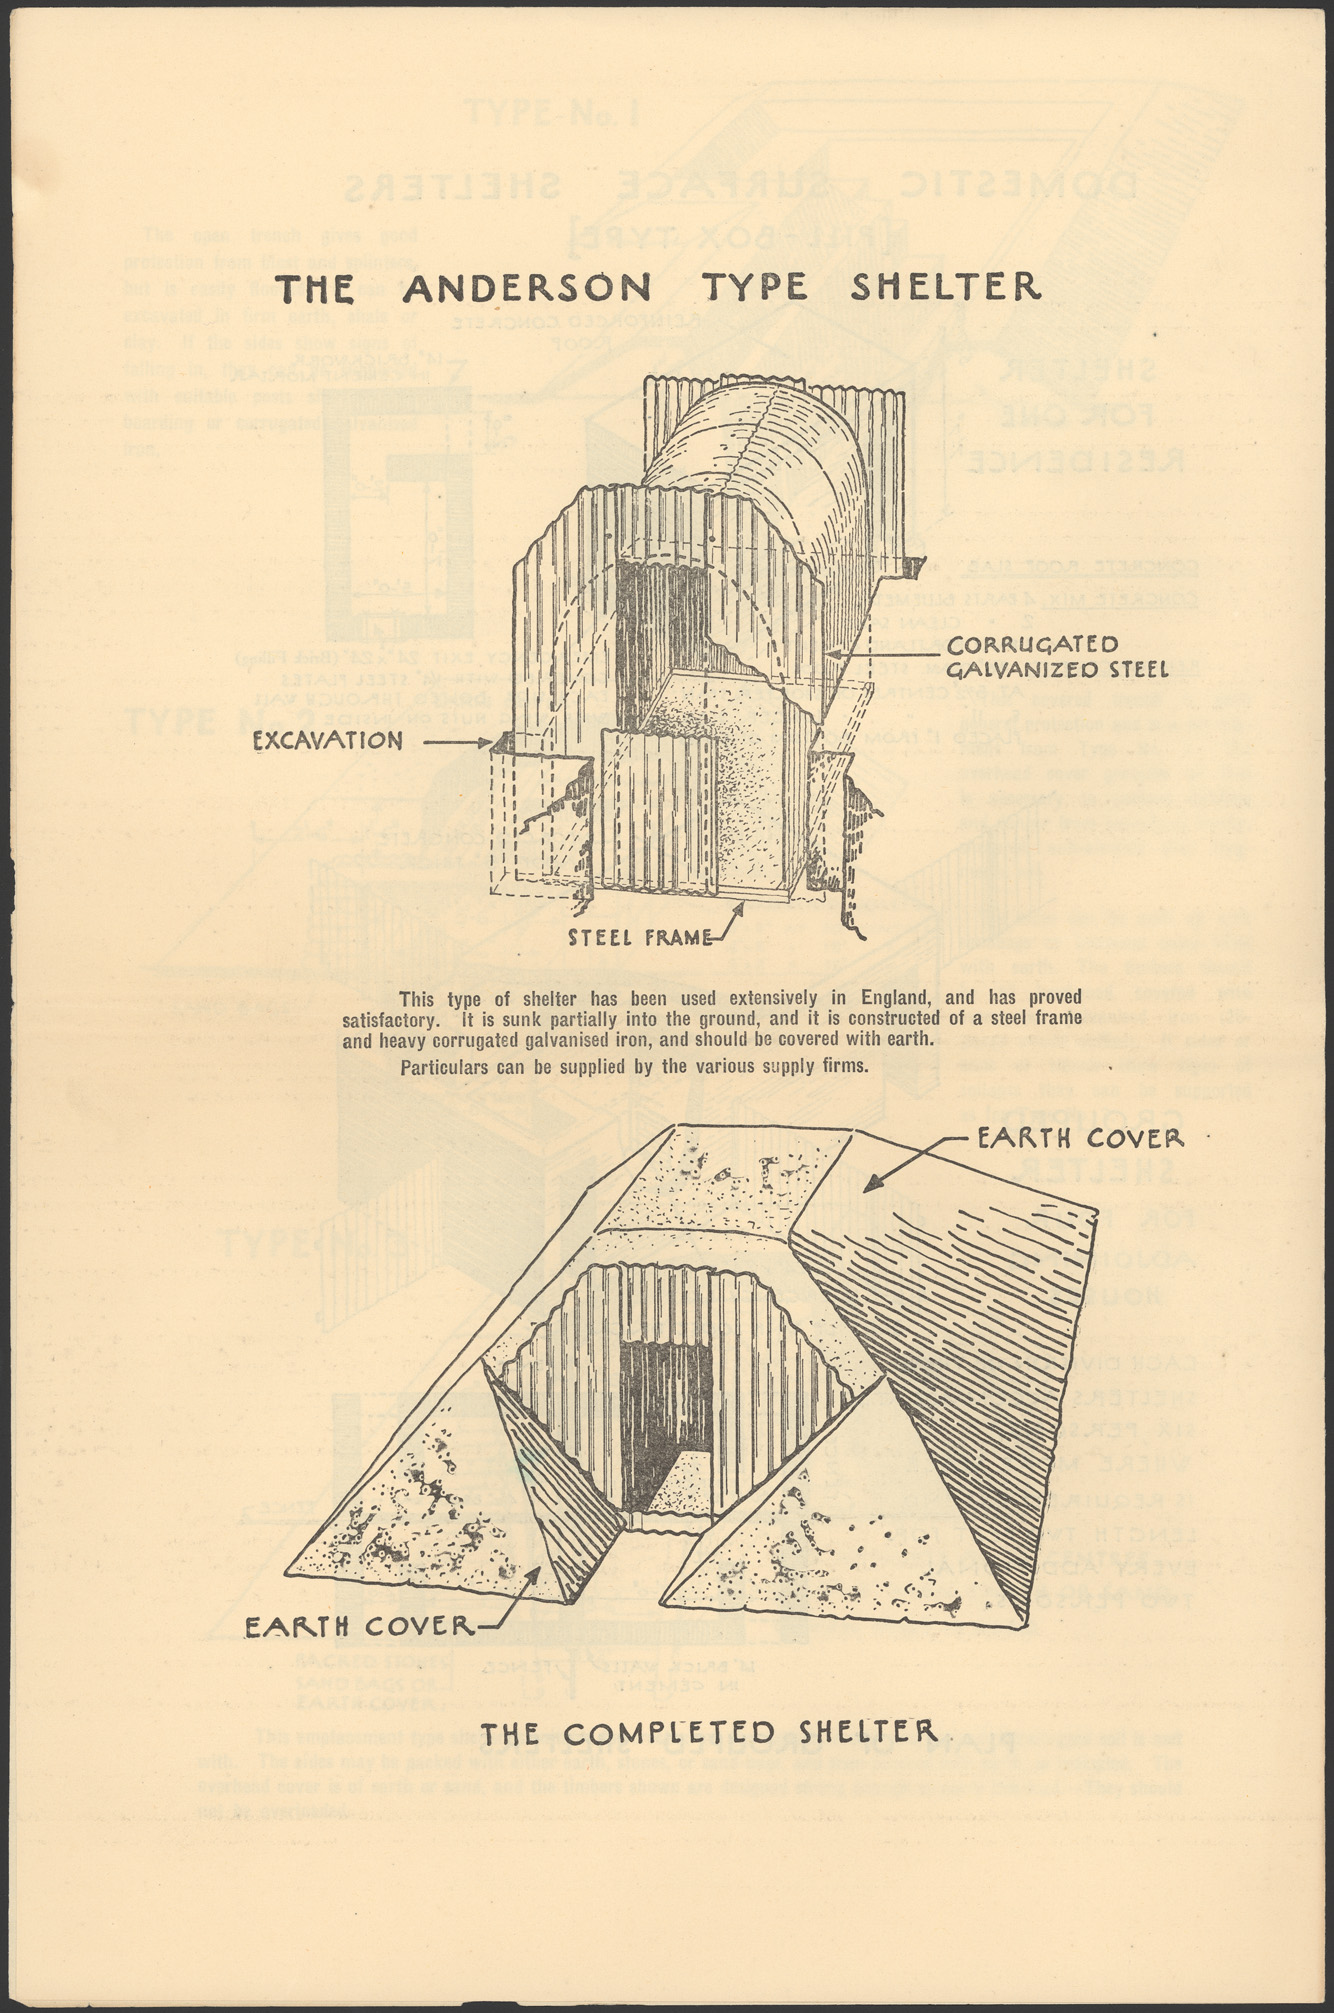 air raid shelter instructions